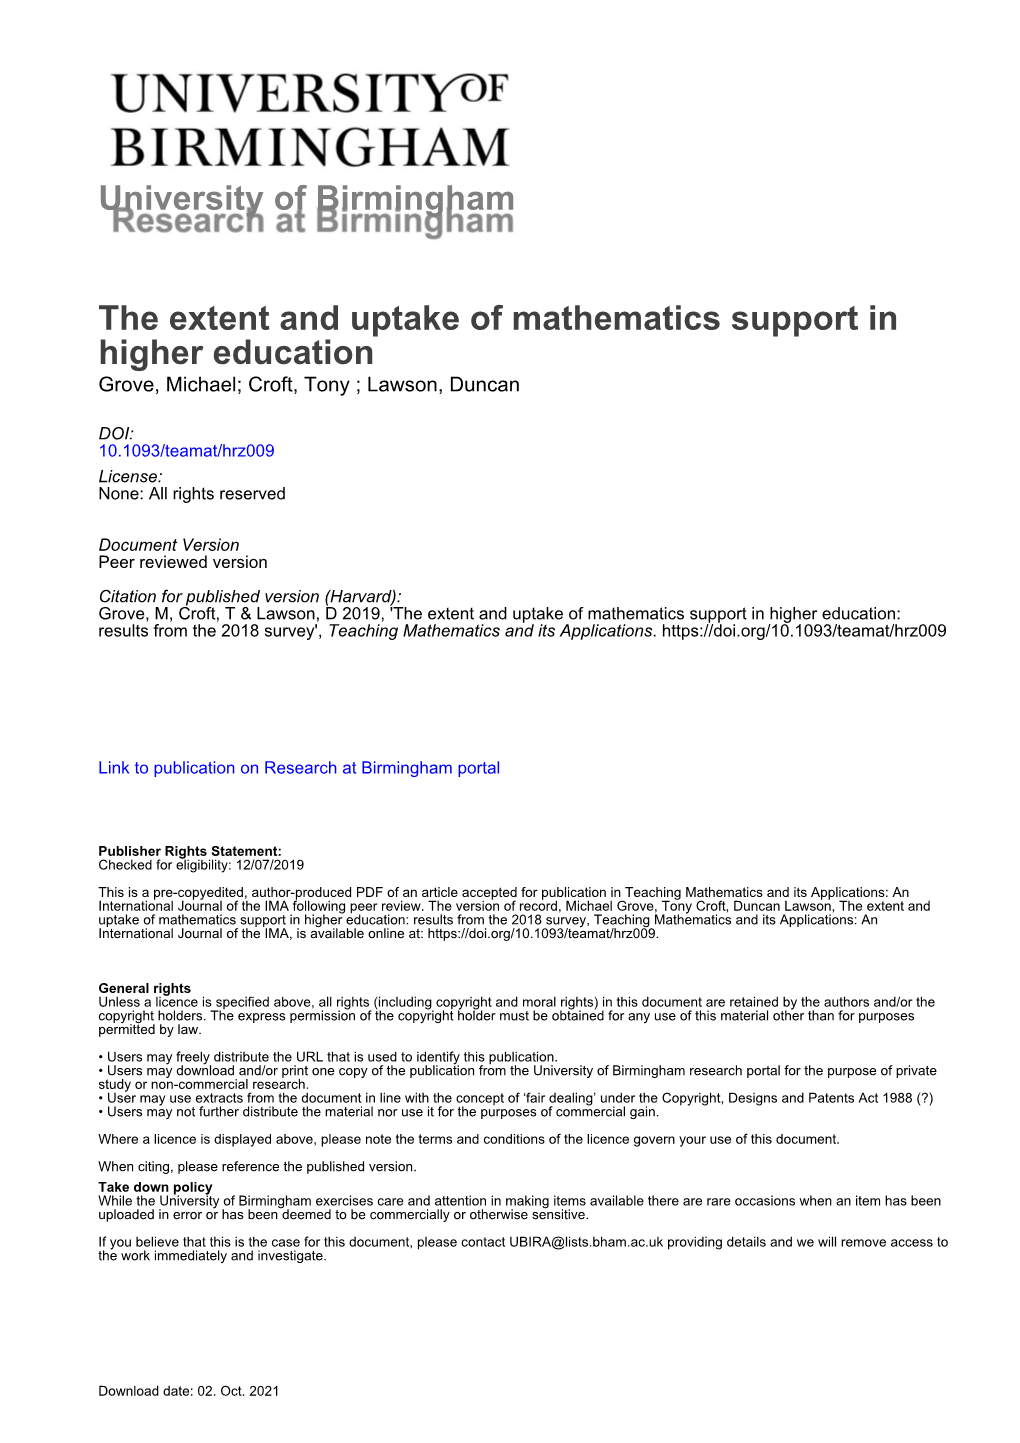 University of Birmingham the Extent and Uptake of Mathematics Support